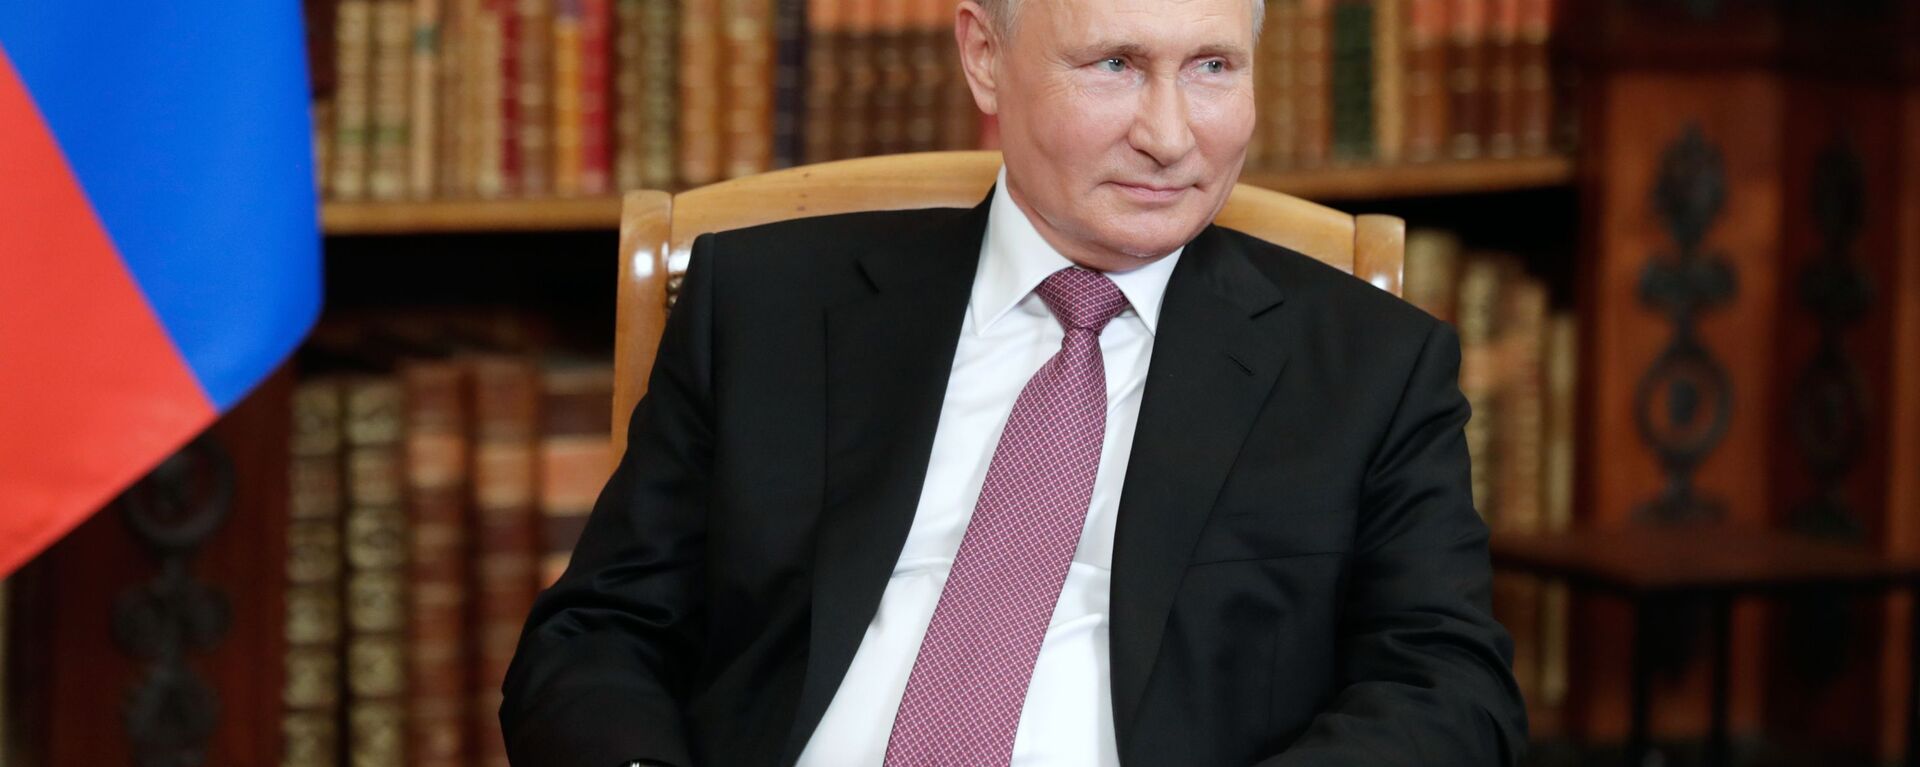  Президент РФ Владимир Путин во время встречи с президентом США Джо Байденом в Женеве на вилле Ла Гранж - Sputnik Узбекистан, 1920, 30.06.2021